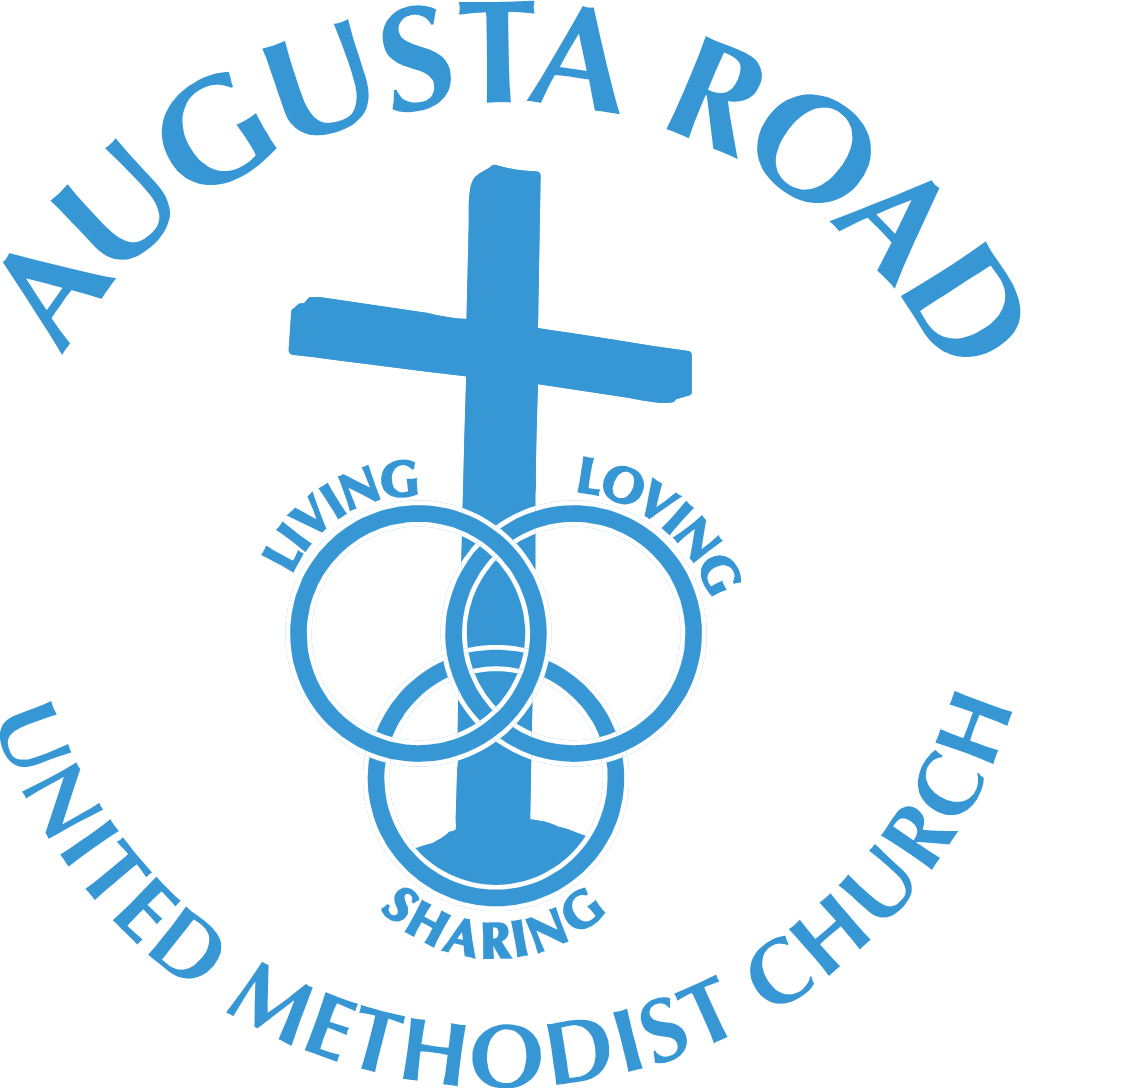 Augusta Road United Methodist Church